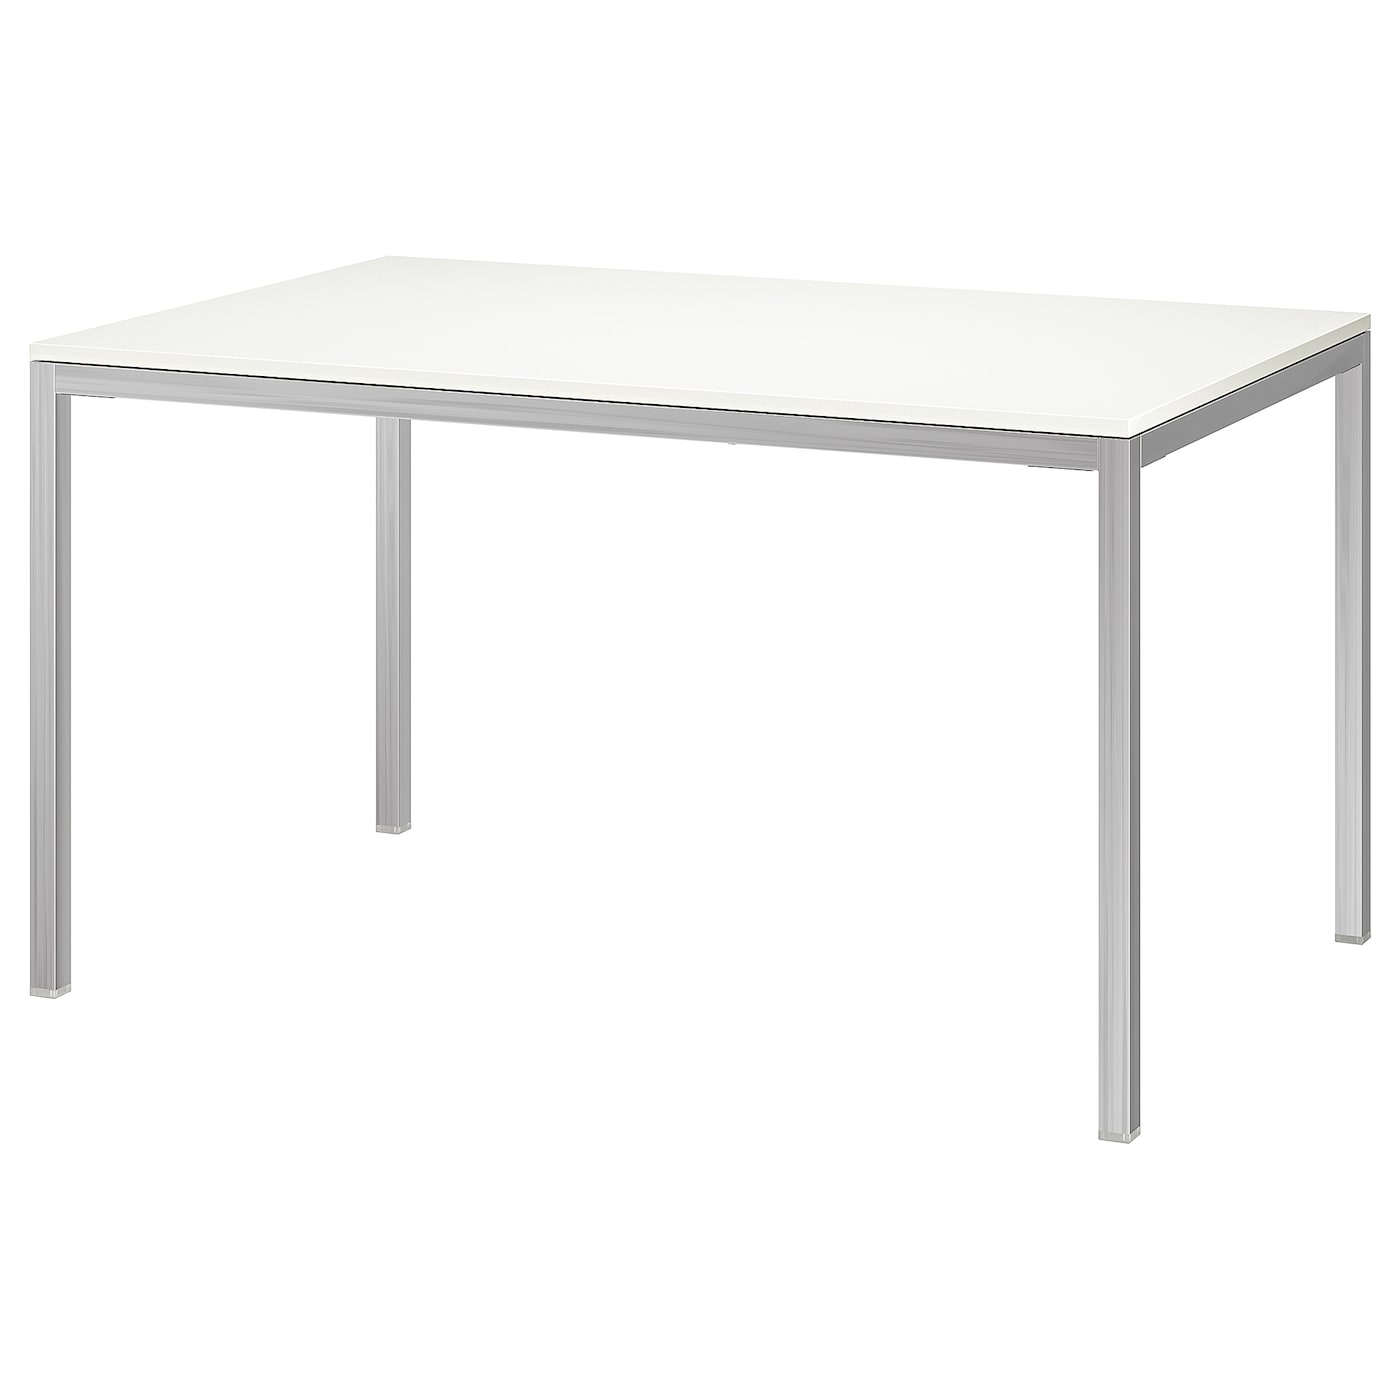 Стол обеденный - IKEA TORSBY, 135х85х75 см, белый/металлик, ТОРСБИ ИКЕА